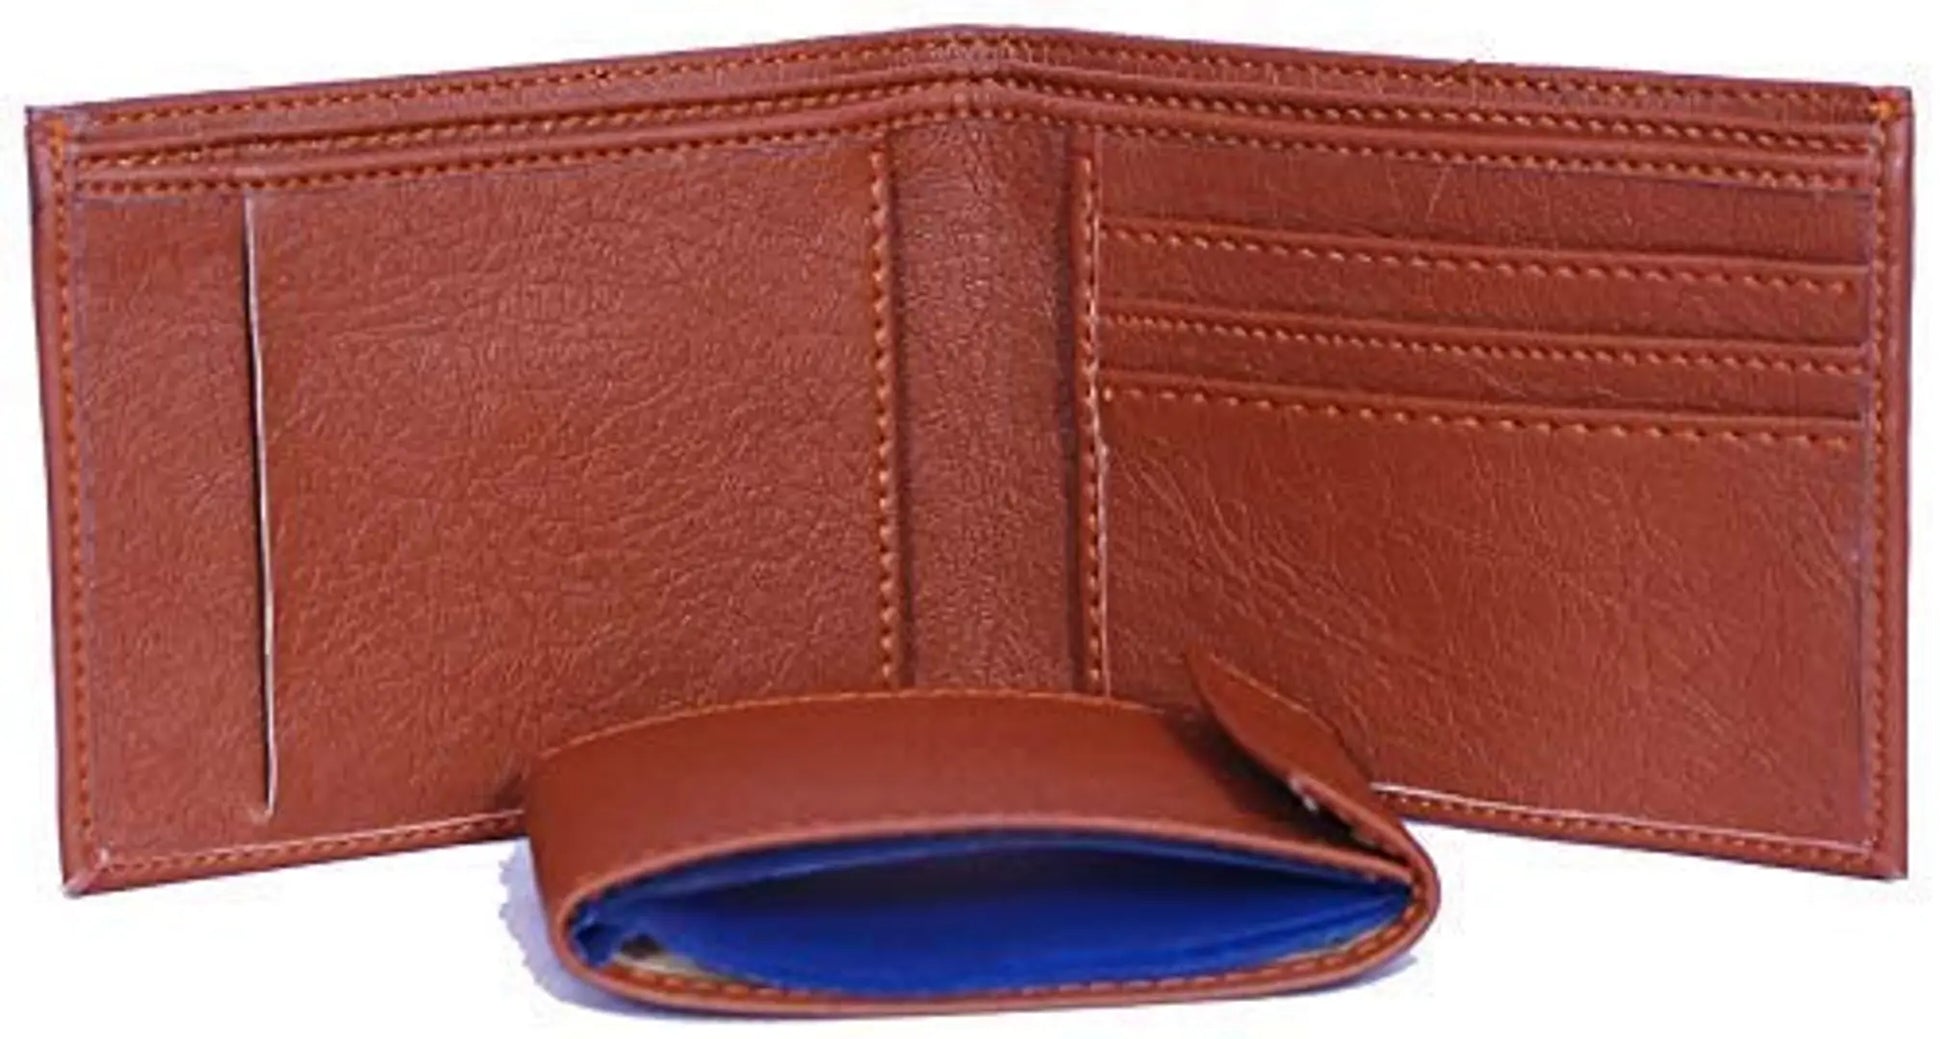 BLAQUE Artificial Leather Wallet for Men  Boys, Casual  Formal - 020-Tan